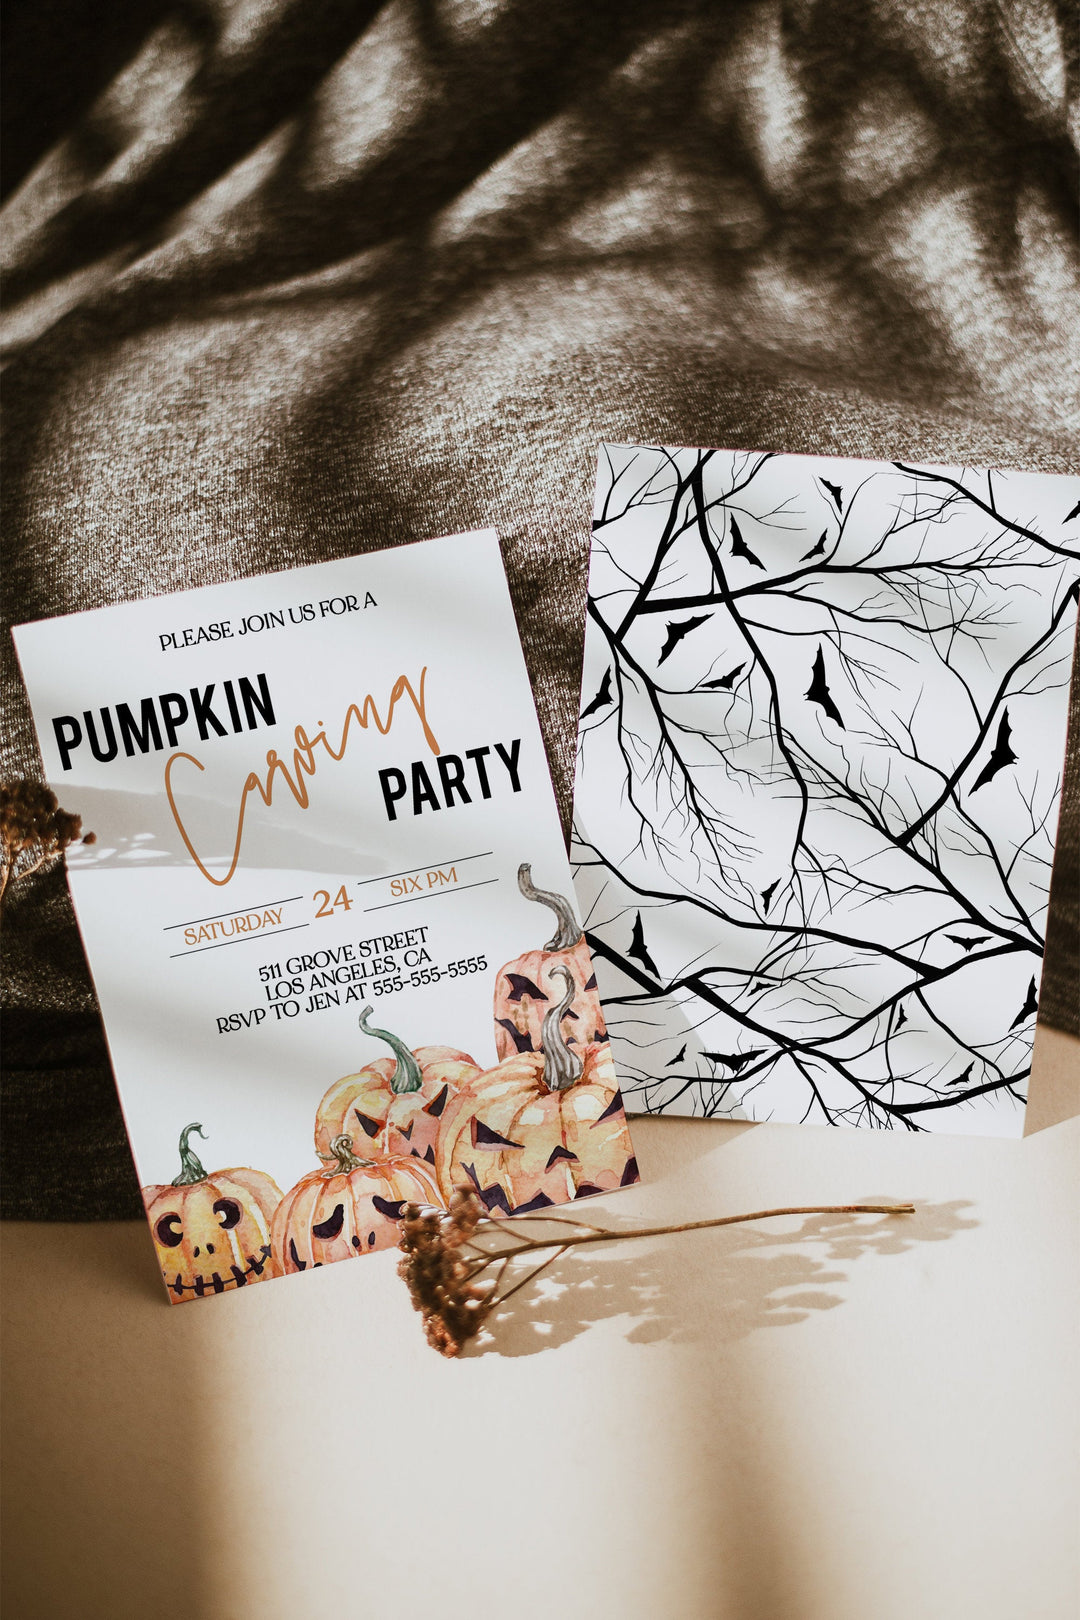 Pumpkin Carving Party Invitation - Jack O' Lantern Invitation - Halloween Party Invitation - Halloween Pumpkin Carving Invitation - Editable